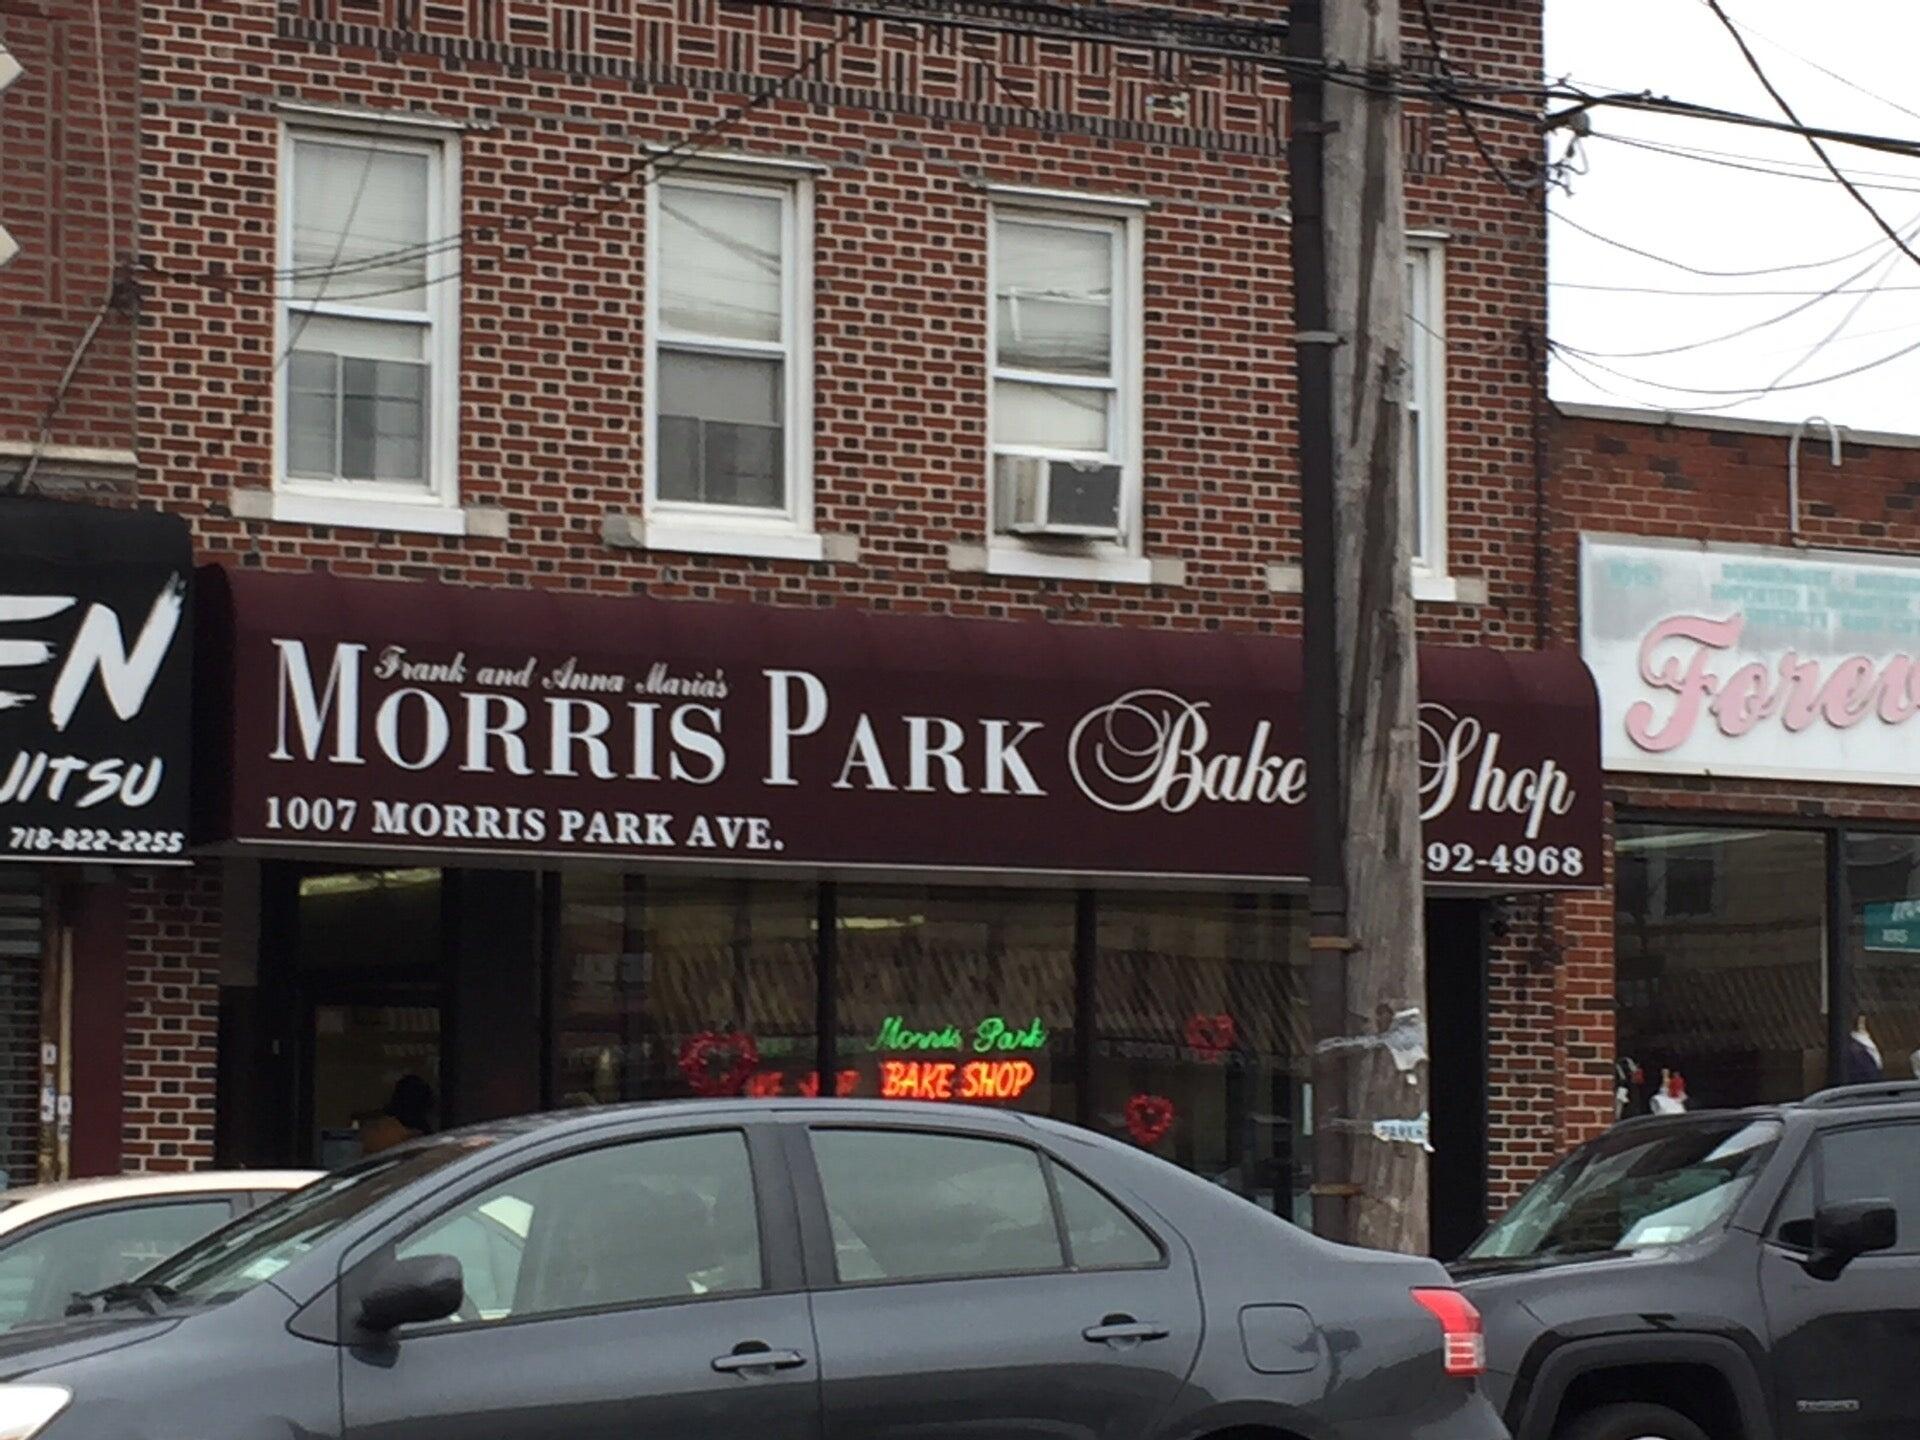 Morris Park Bake Shop